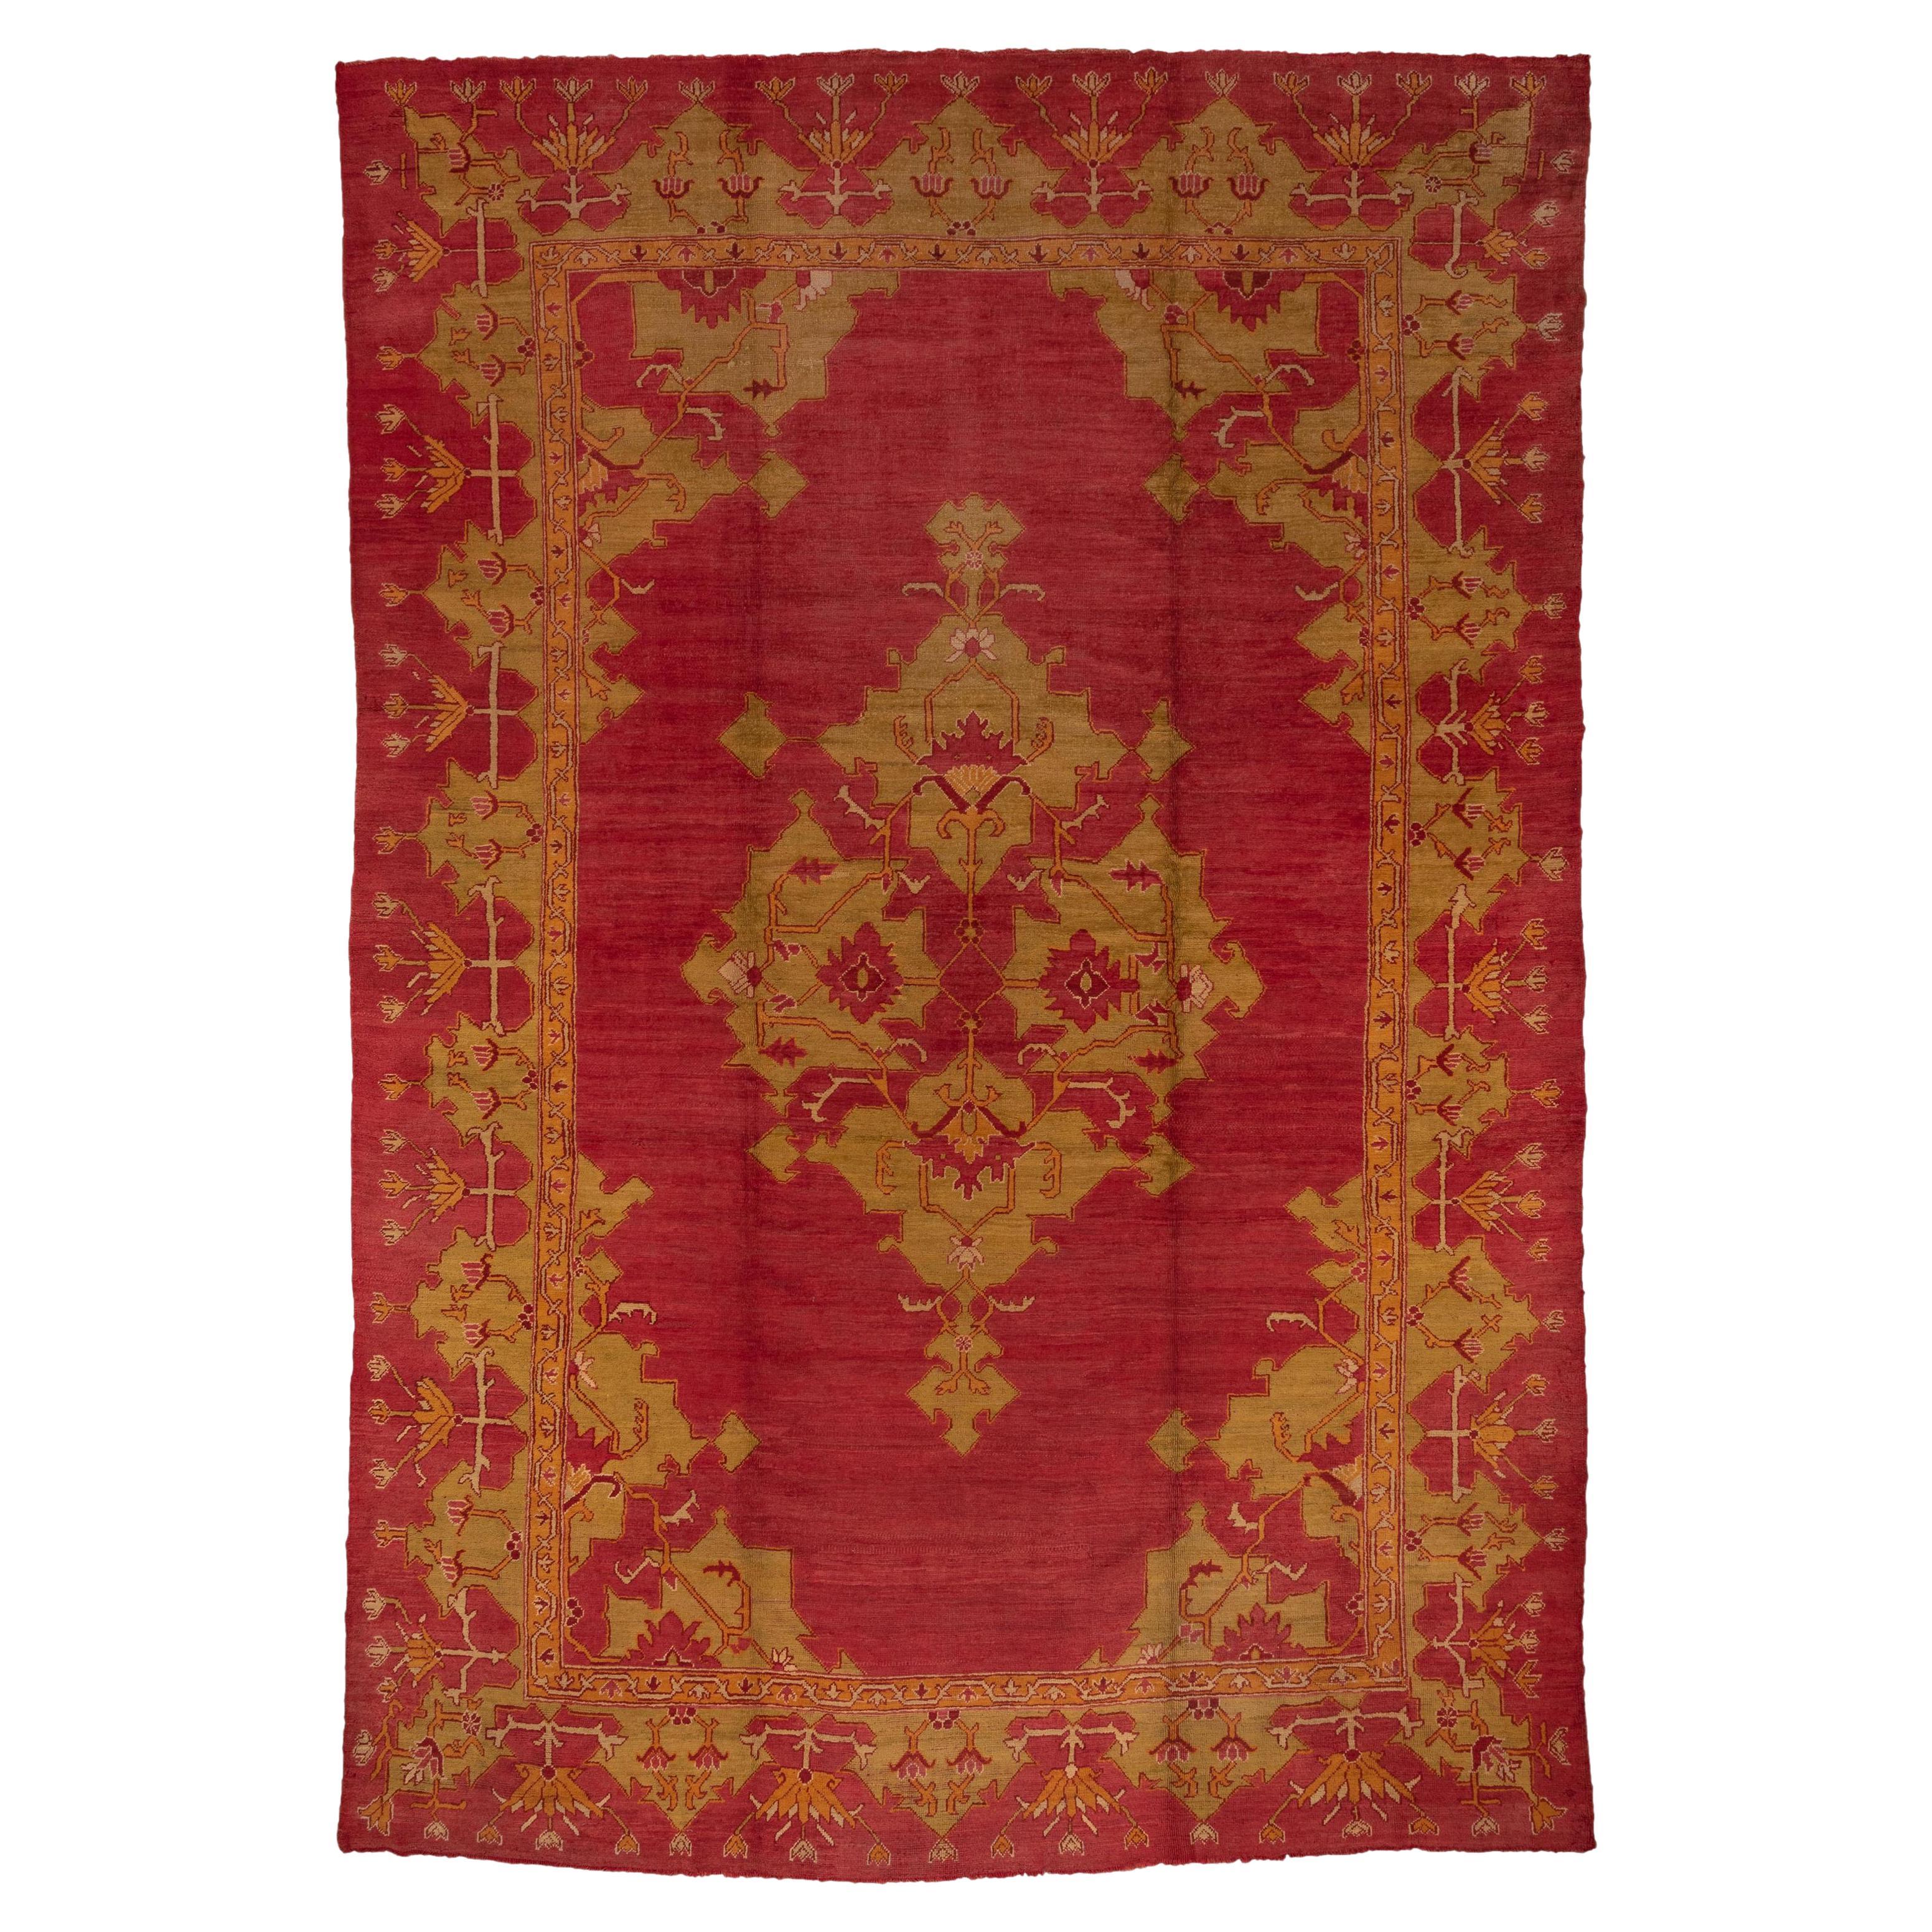 Outstanding Excellent Condition Antique Oushak Carpet For Sale